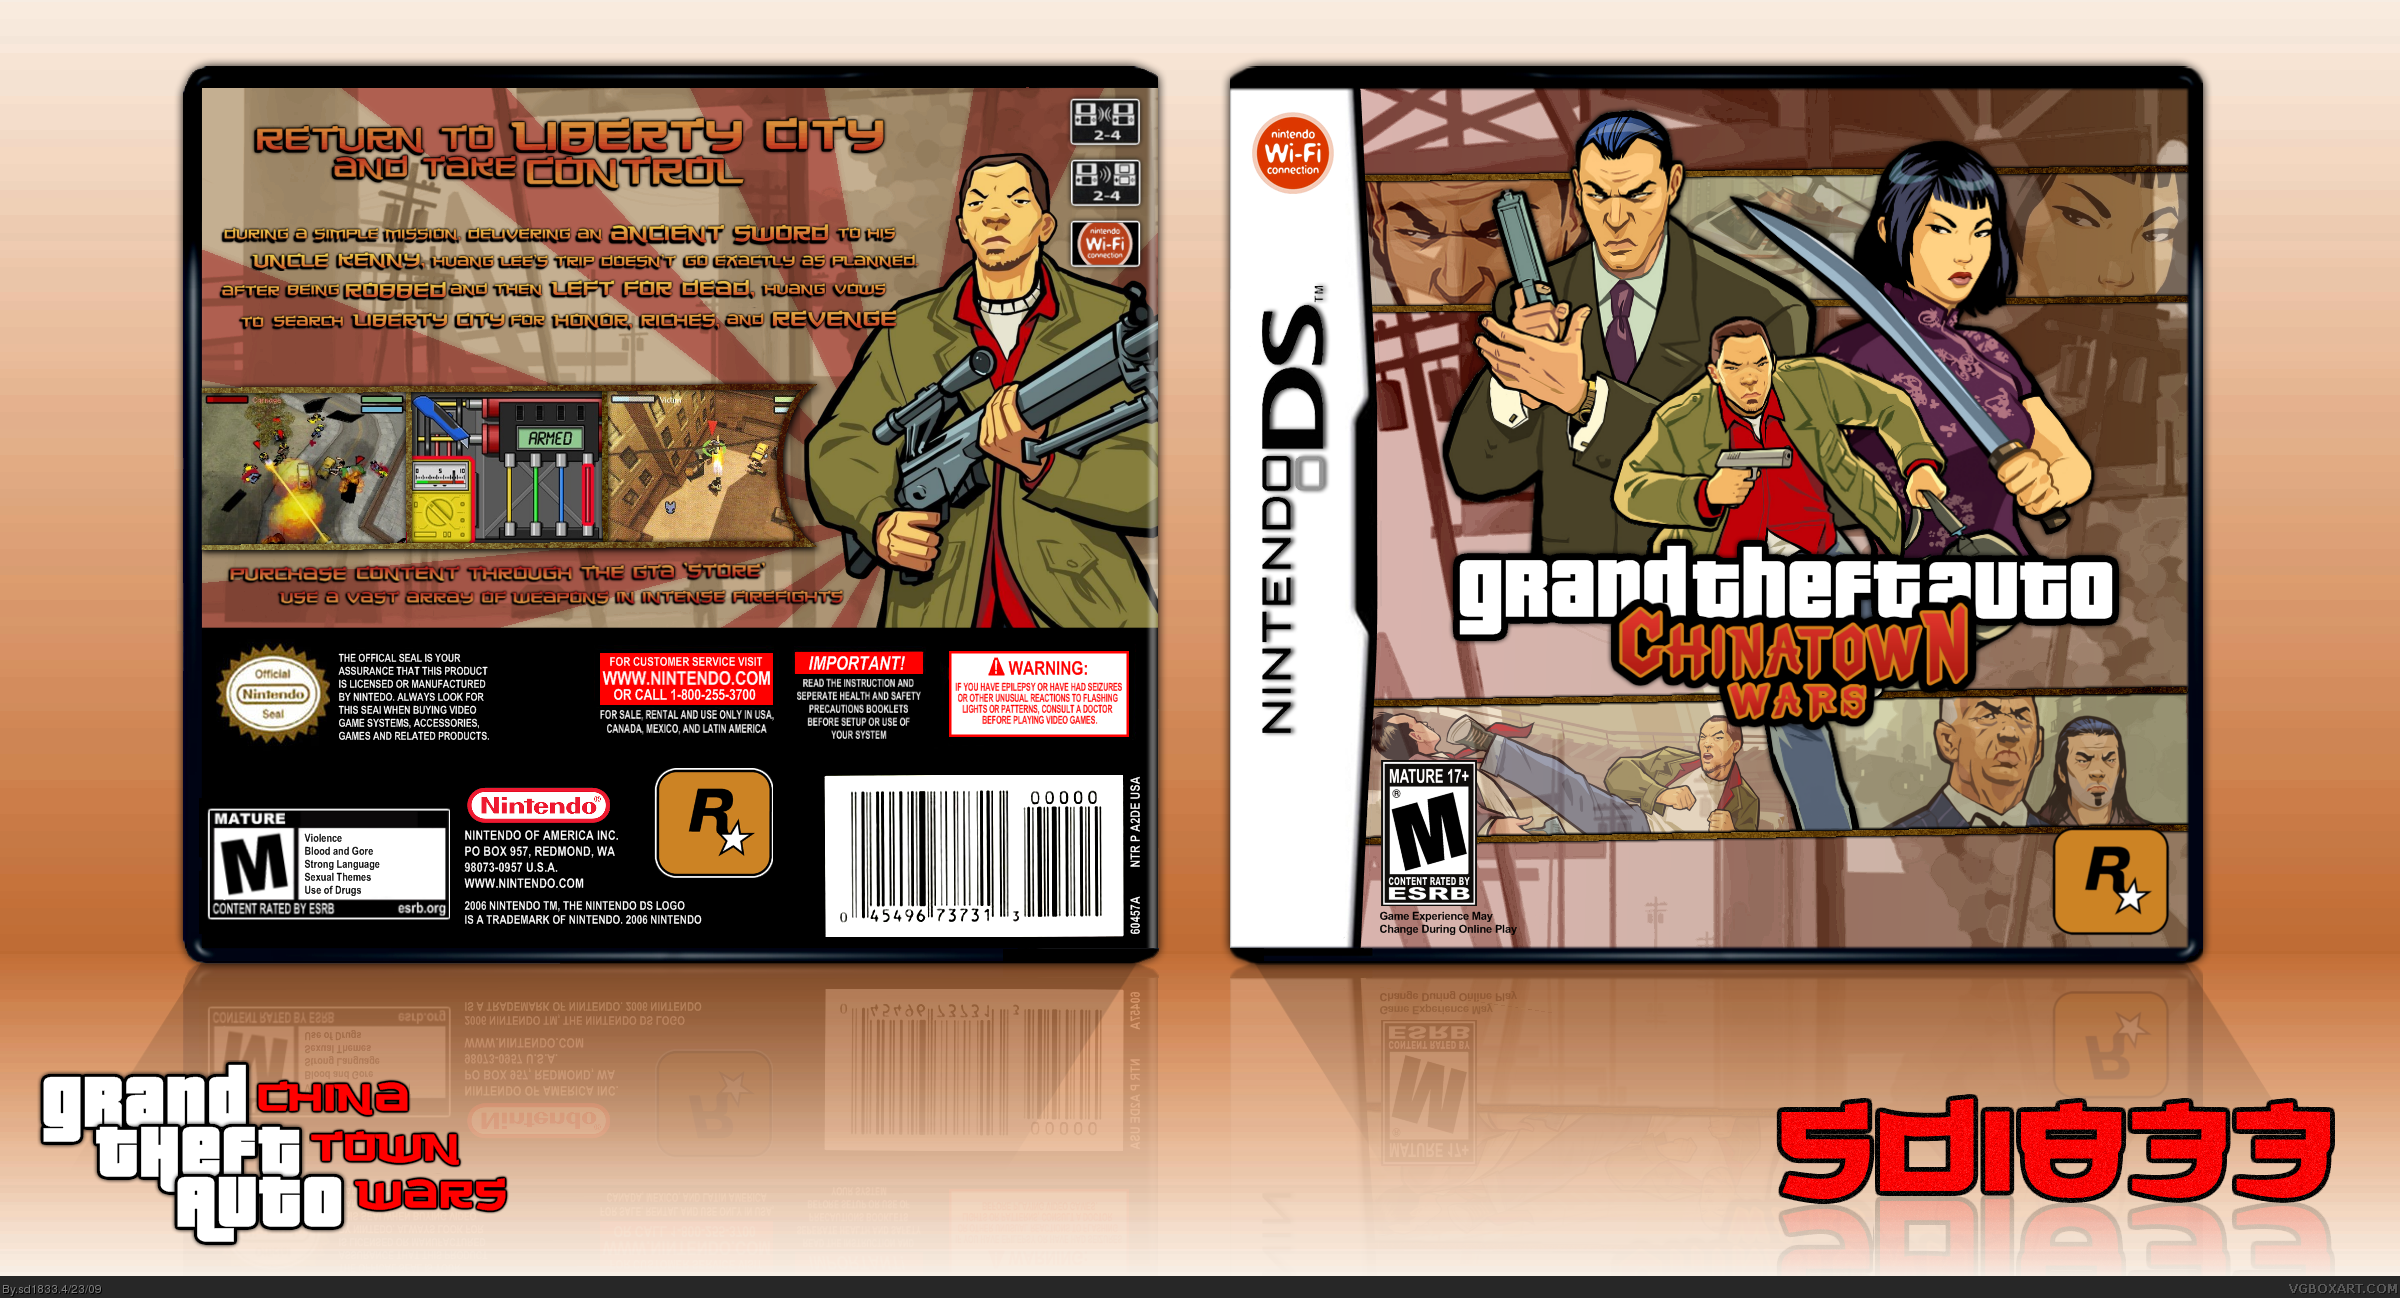 Grand Theft Auto: Chinatown Wars box cover